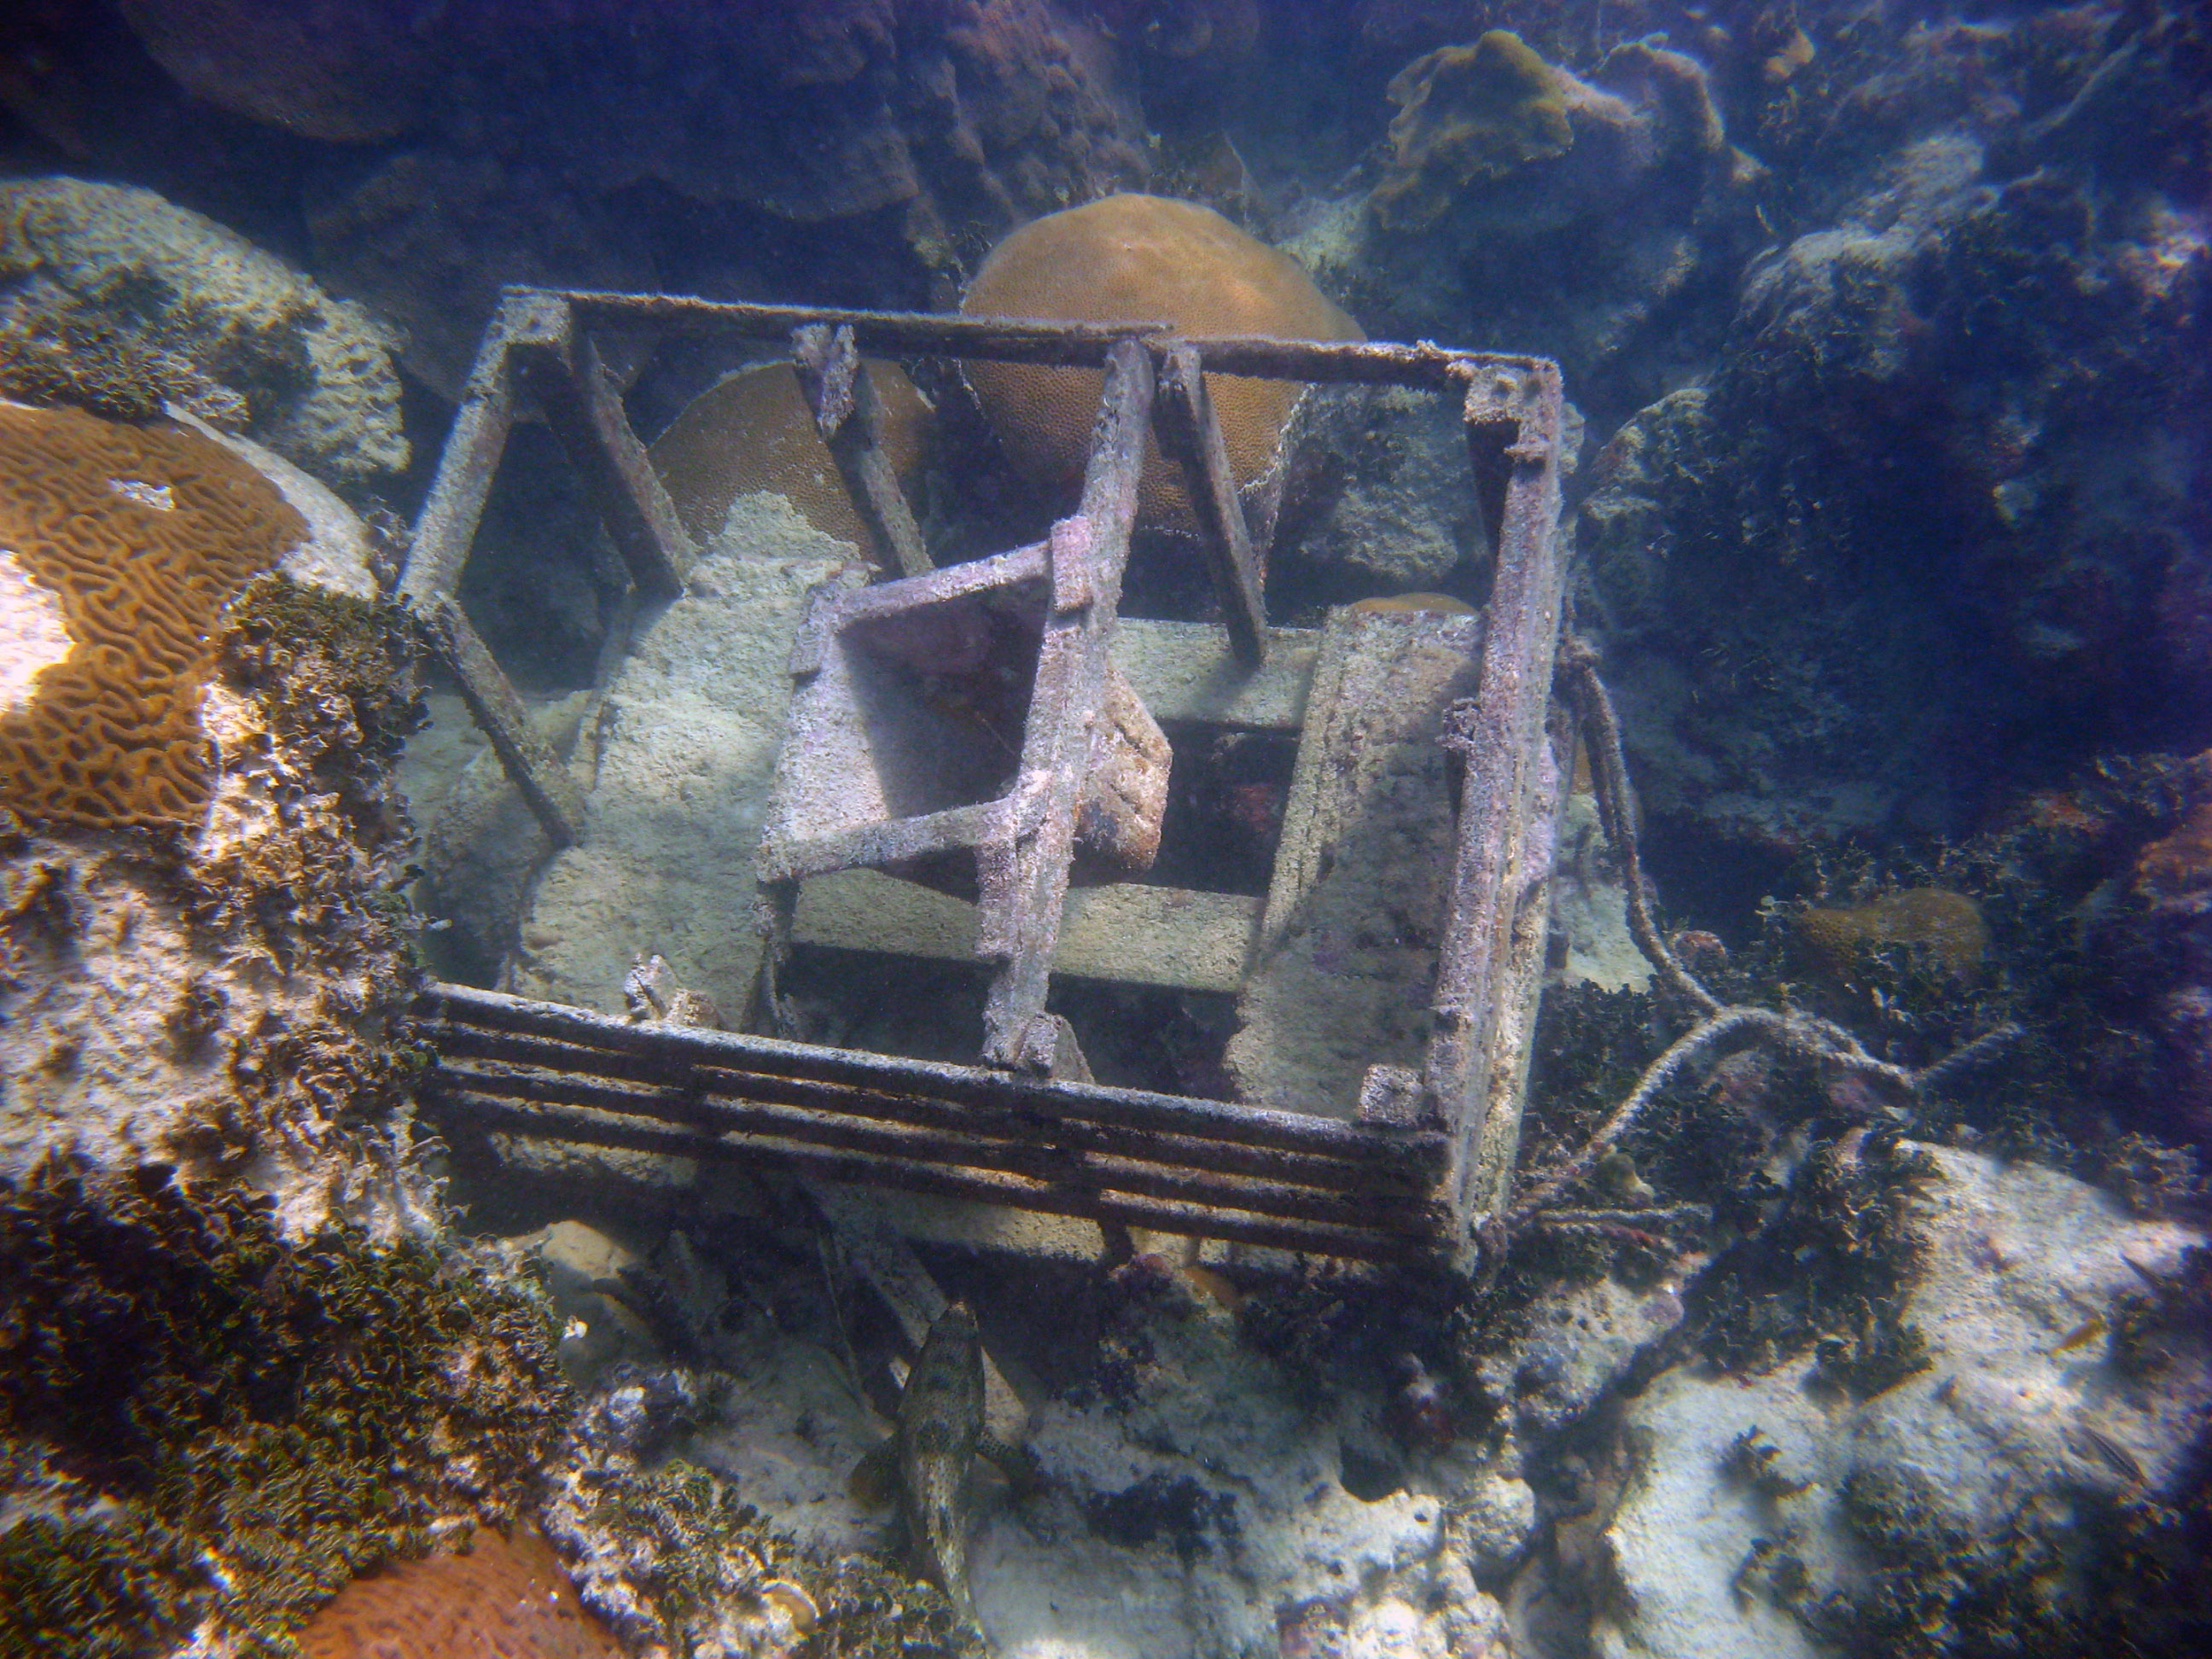 Lobster Trap Debris in the Florida Keys: A Look Back | OR&R's Marine ...